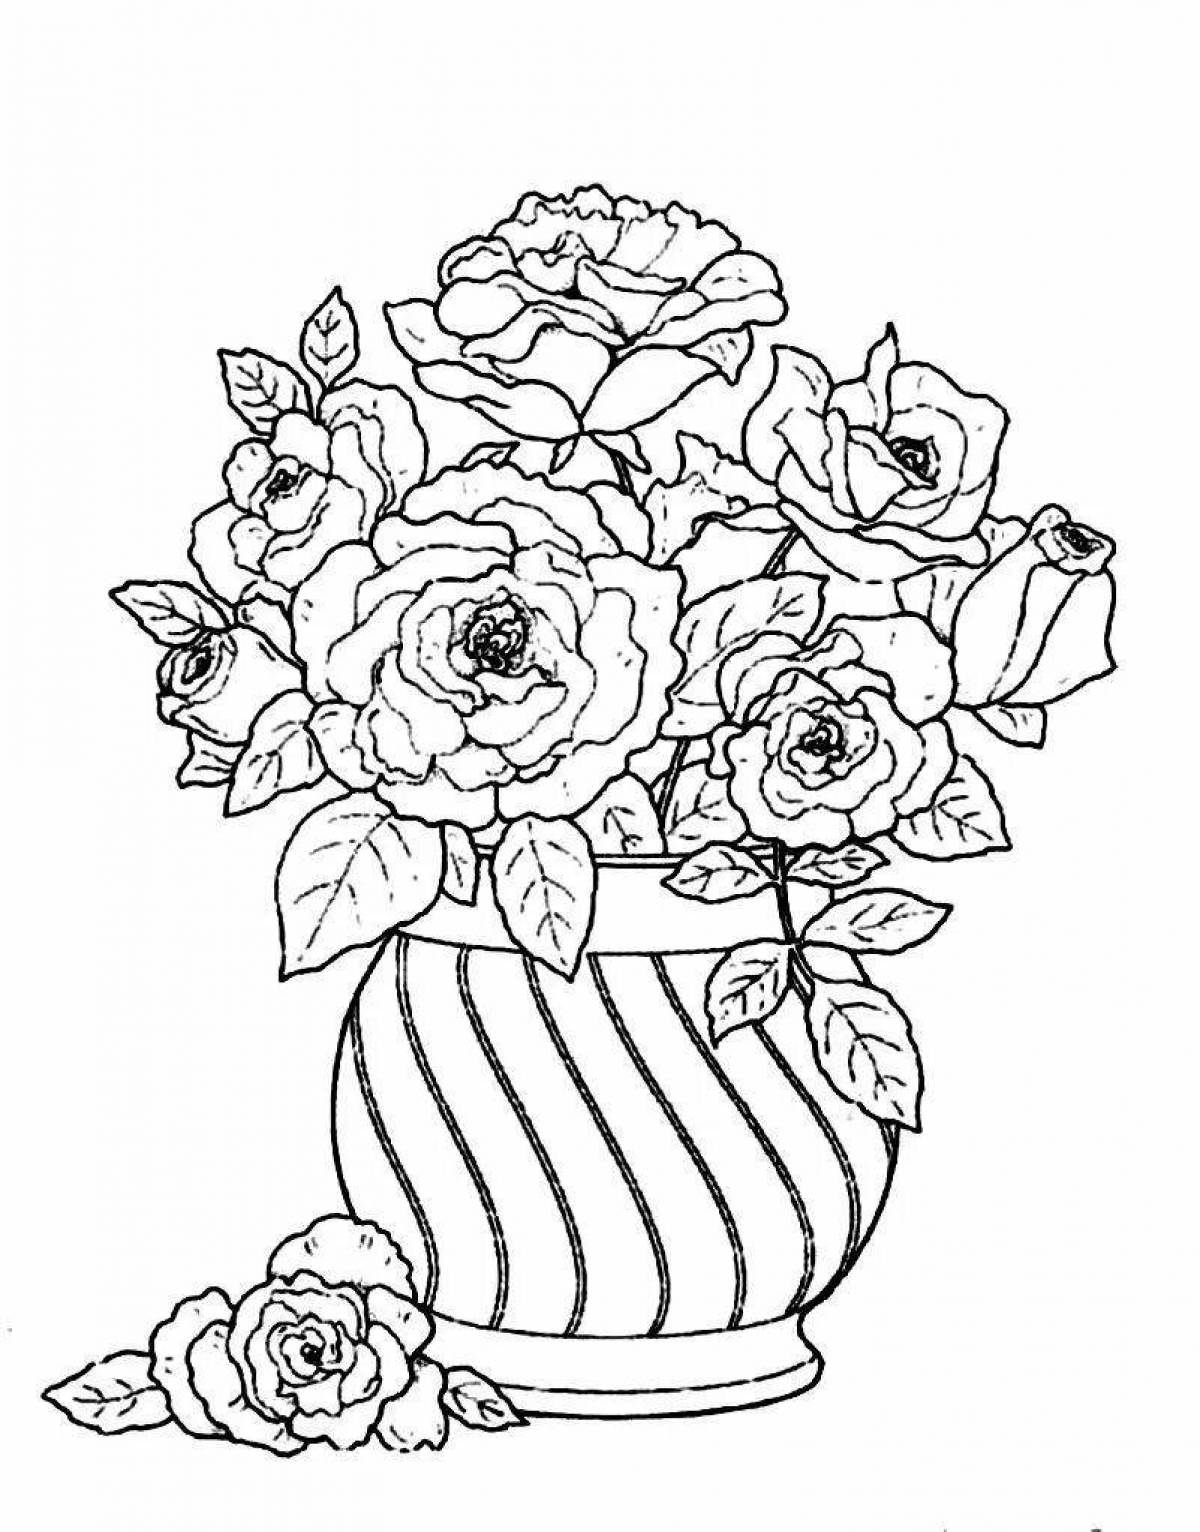 Rose flowers in a vase #1